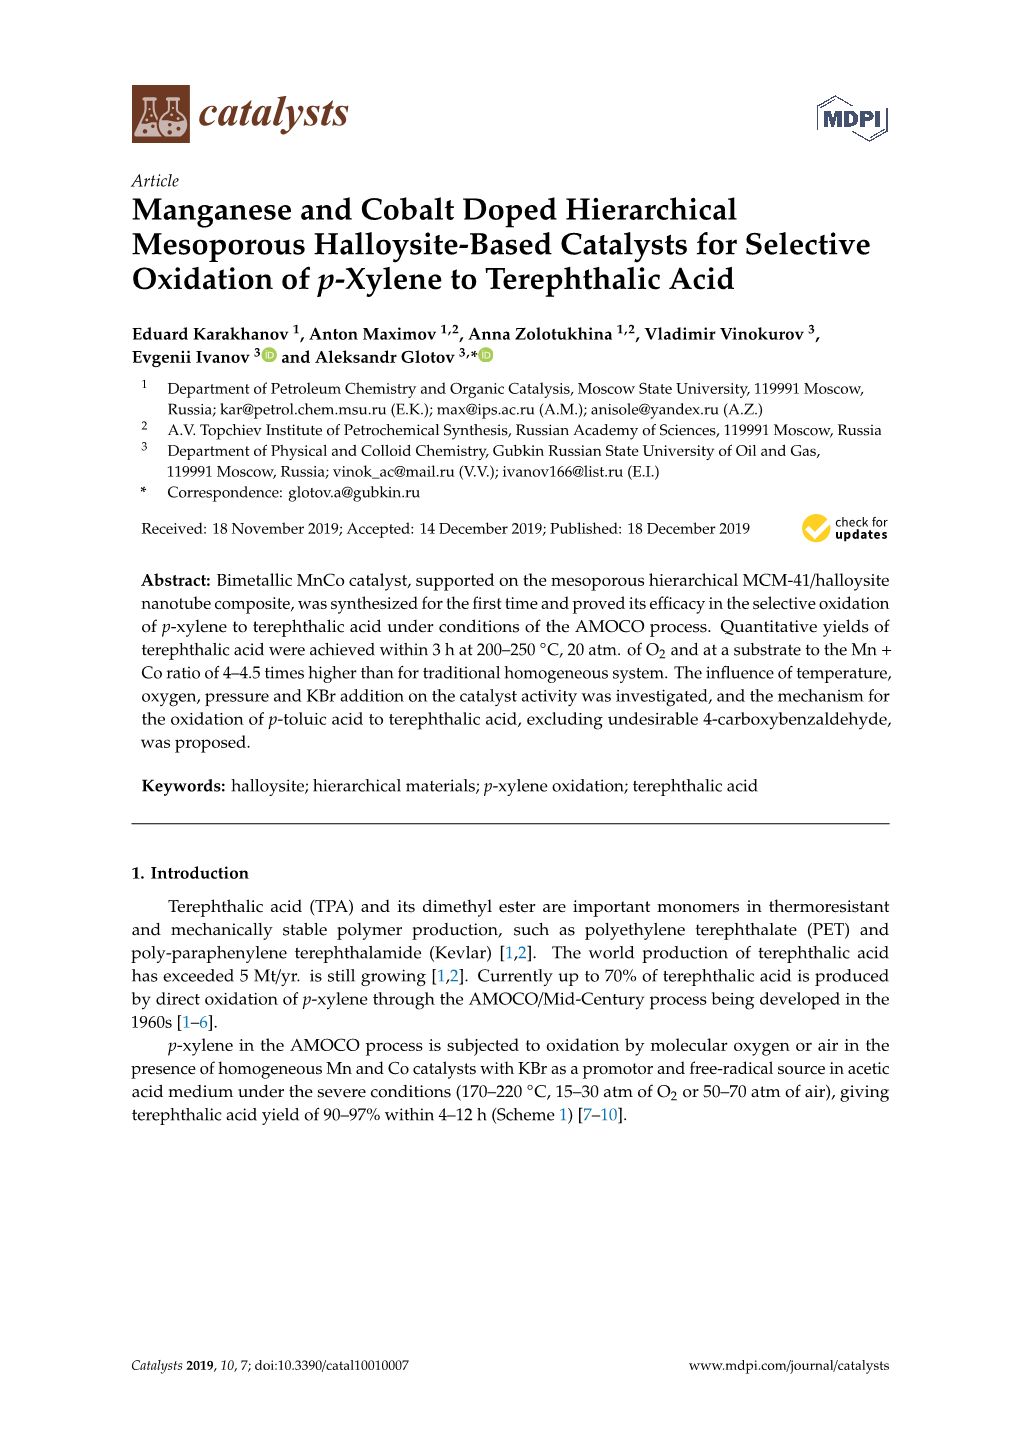 Manganese and Cobalt Doped Hierarchical Mesoporous Halloysite-Based Catalysts for Selective Oxidation of P-Xylene to Terephthalic Acid